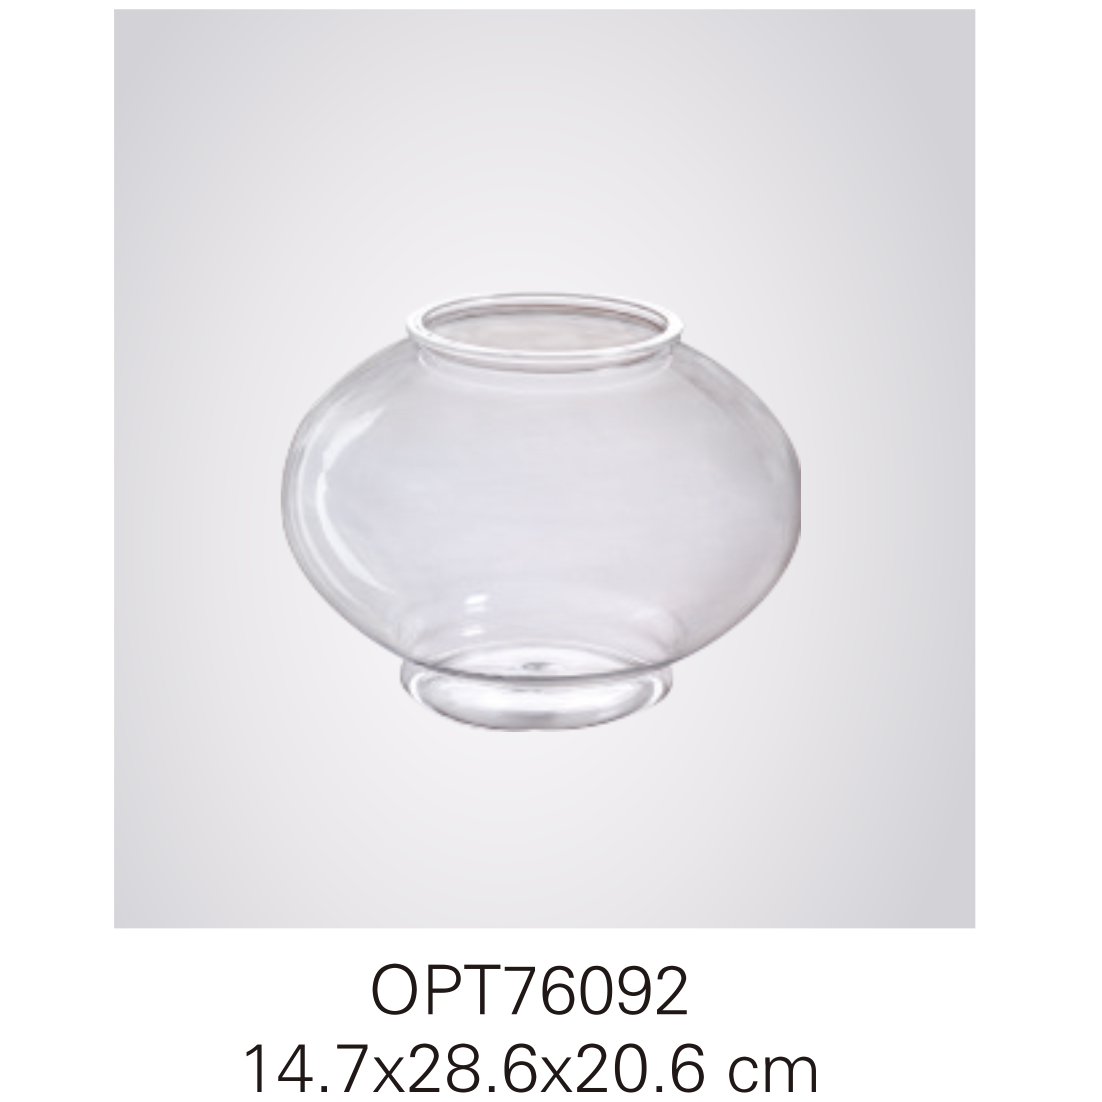 OPT76092 14.7x28.6x20.6cm fishbowls